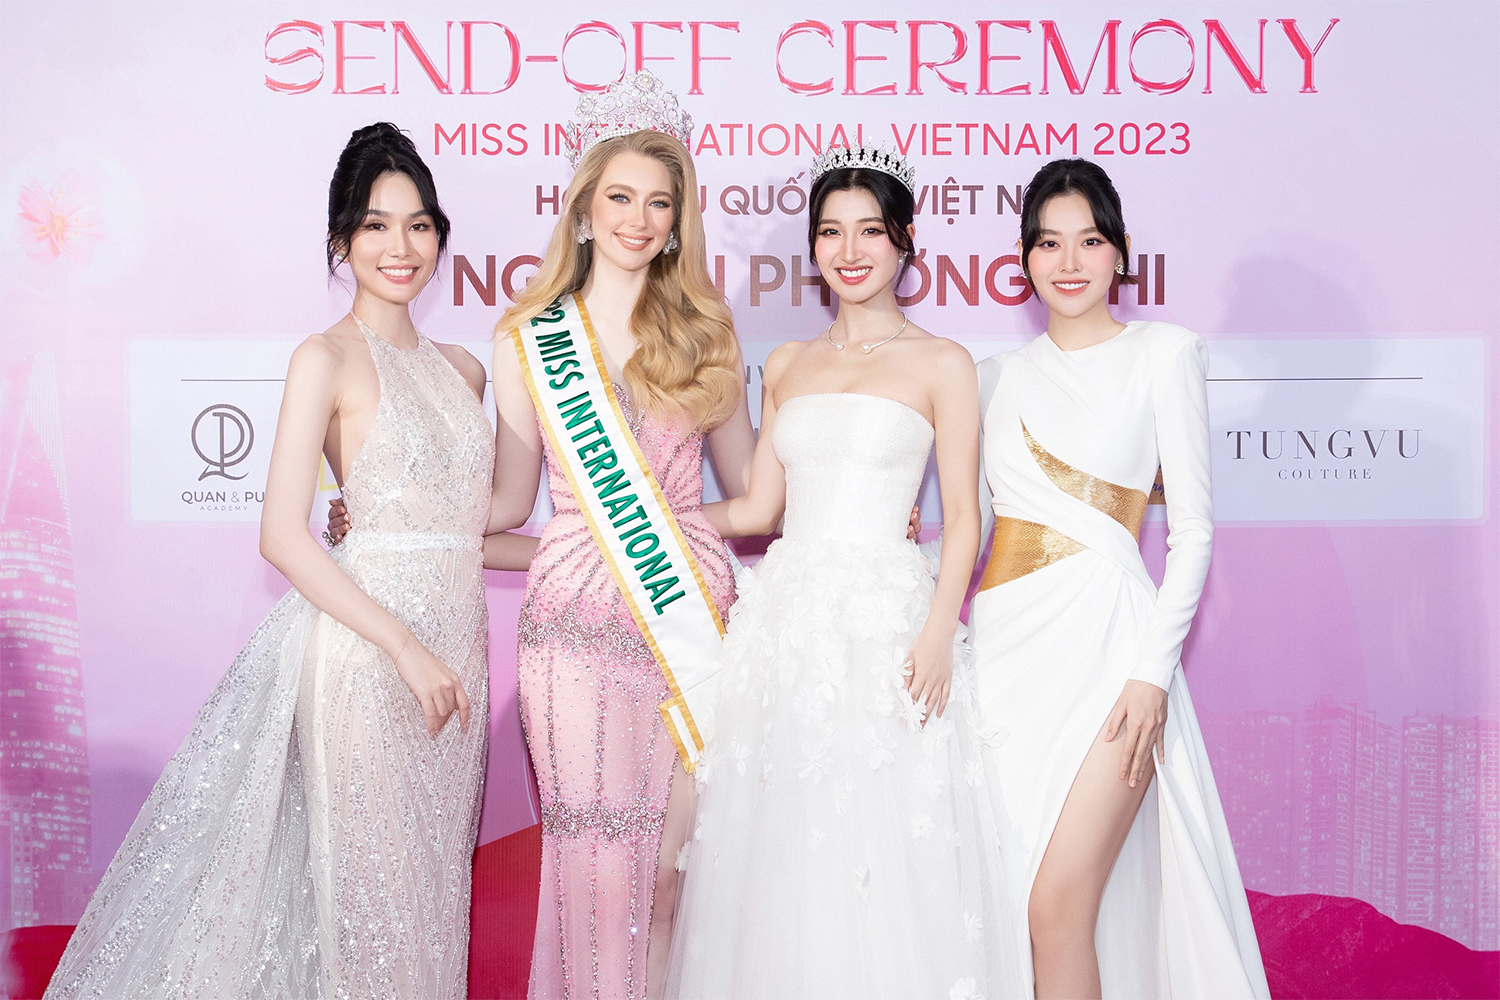 Harper's Bazaar_Miss International Việt Nam 2023 Phương Nhi_06